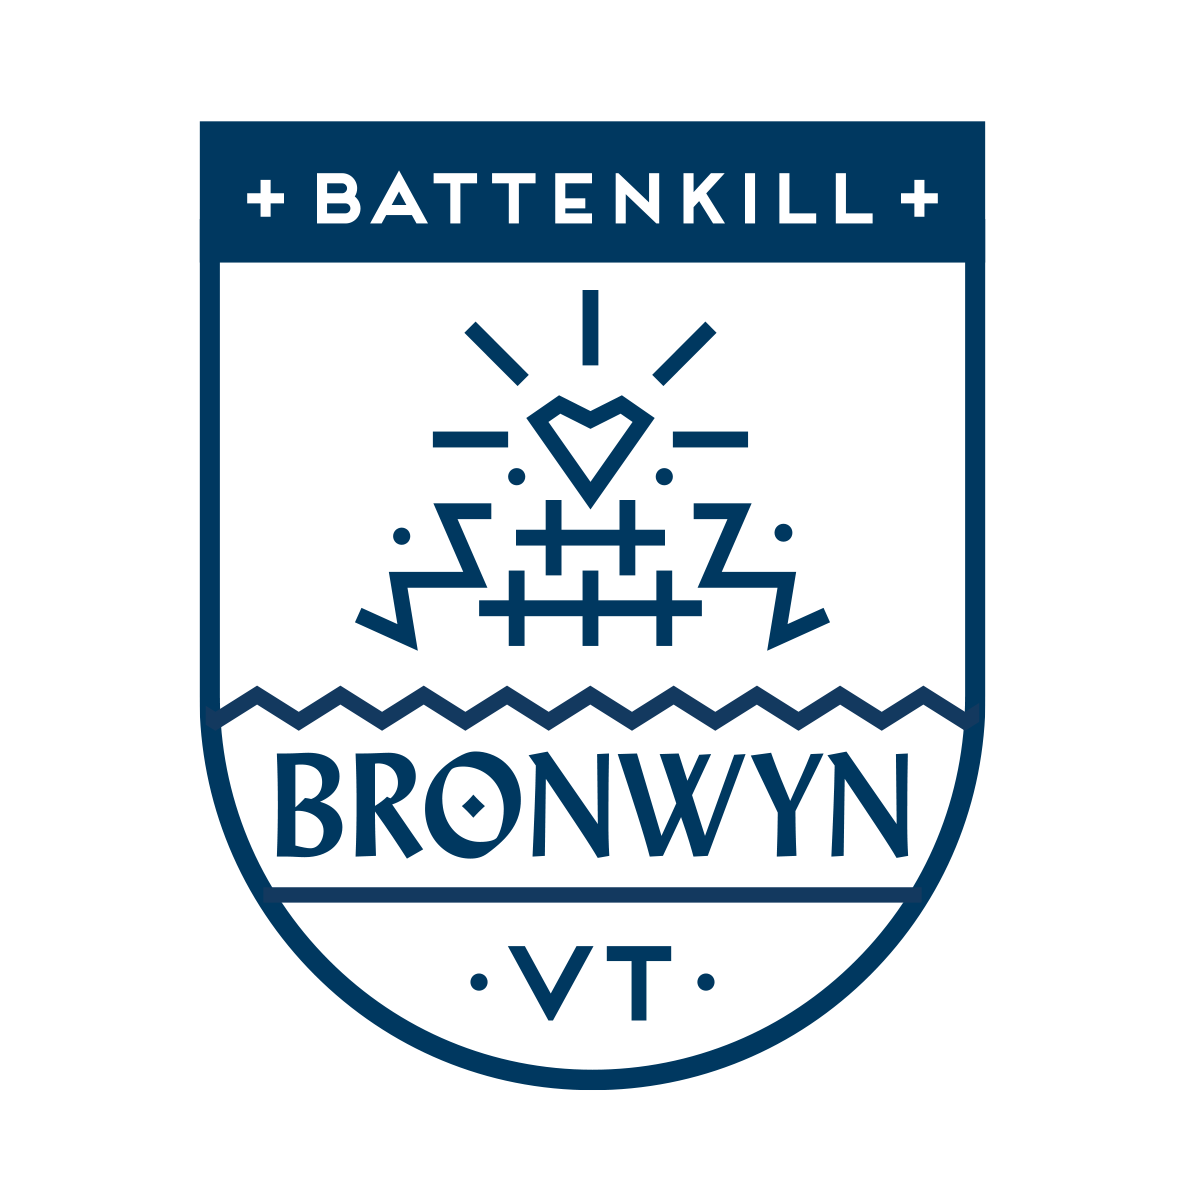 BRONWYN-ON-BATTENKILL